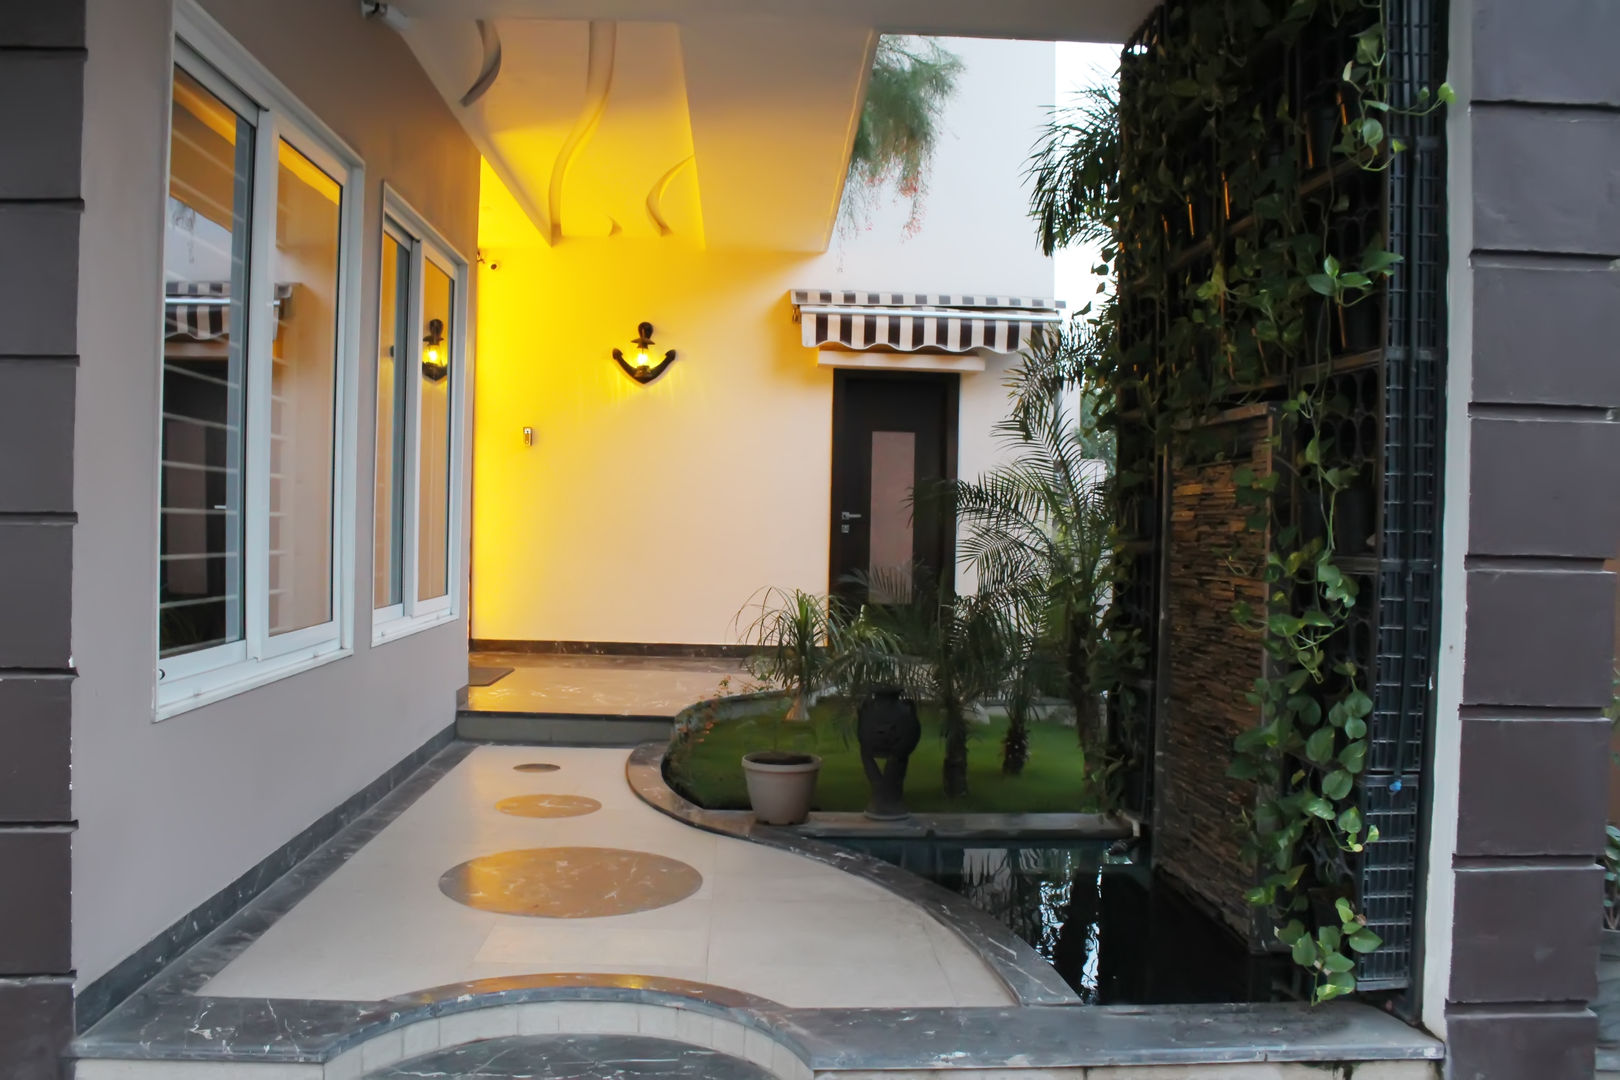 Duplex at Indore, Shadab Anwari & Associates. Shadab Anwari & Associates. حديقة